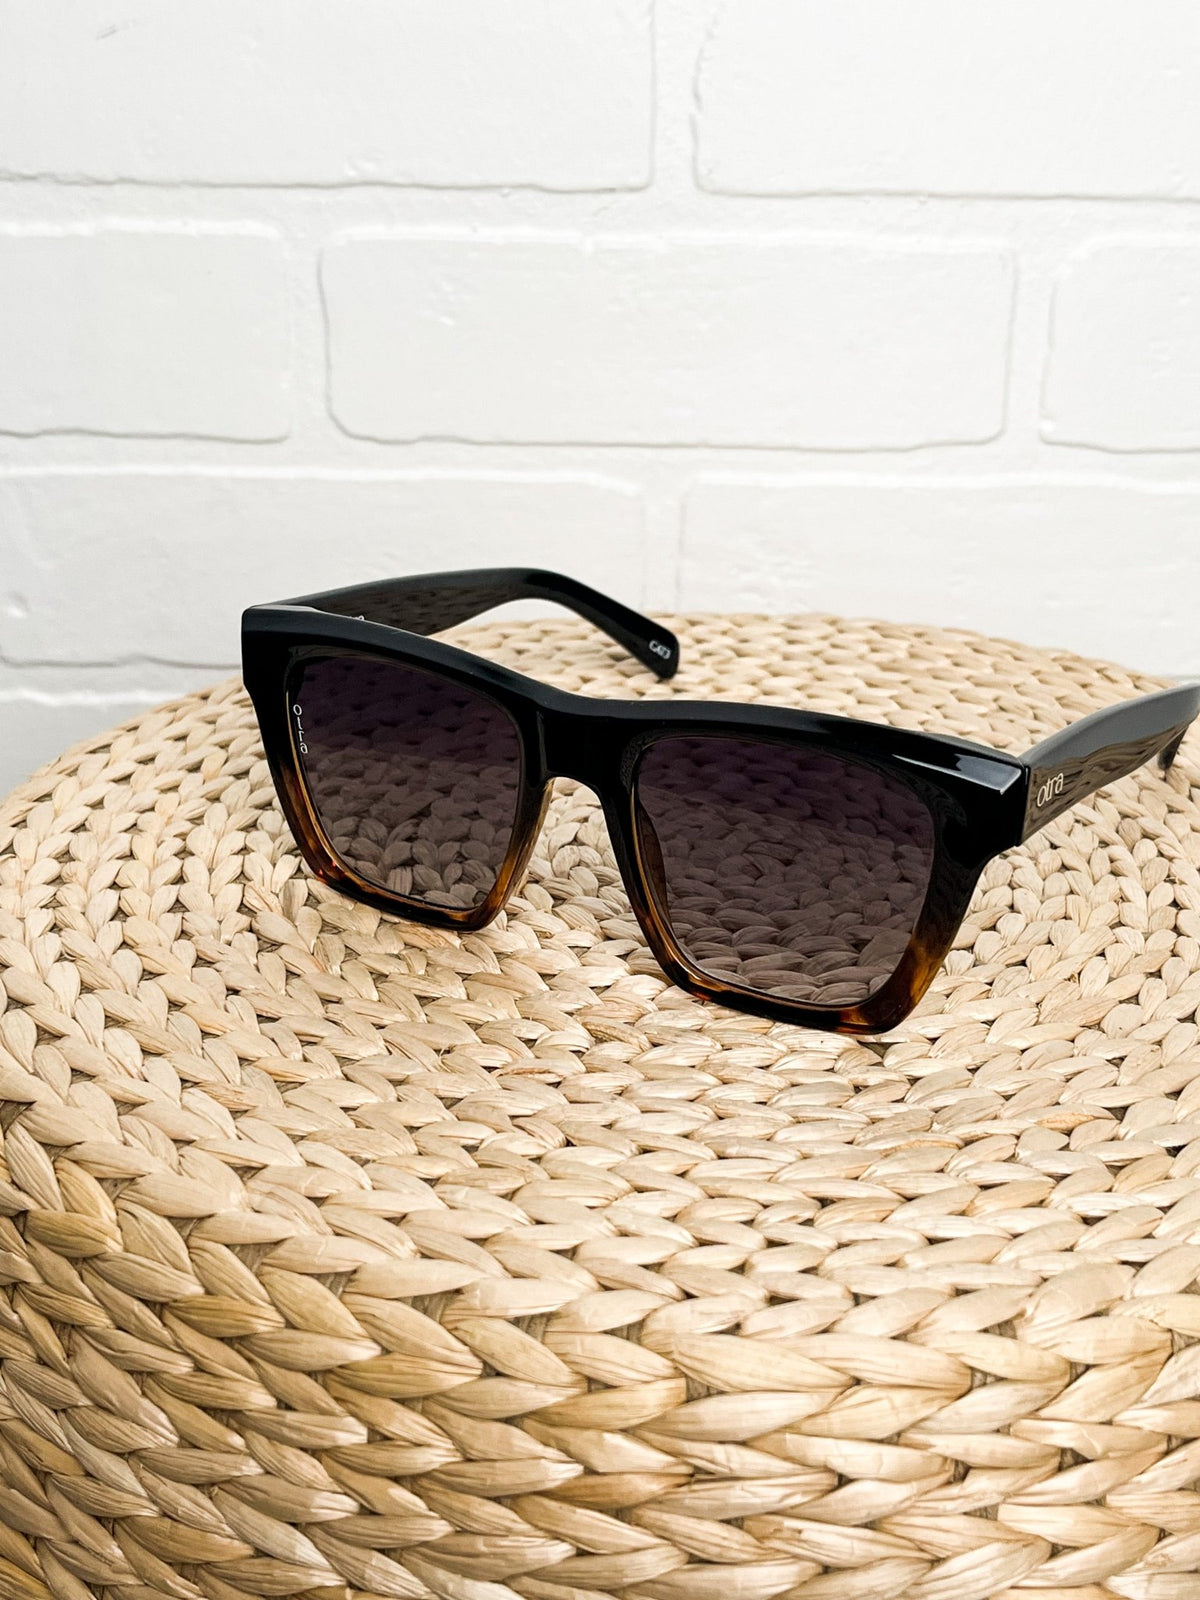 Otra Aspen sunglasses black tortoise - Stylish Sunglasses - Cute Sunglasses at Lush Fashion Lounge Boutique in Oklahoma